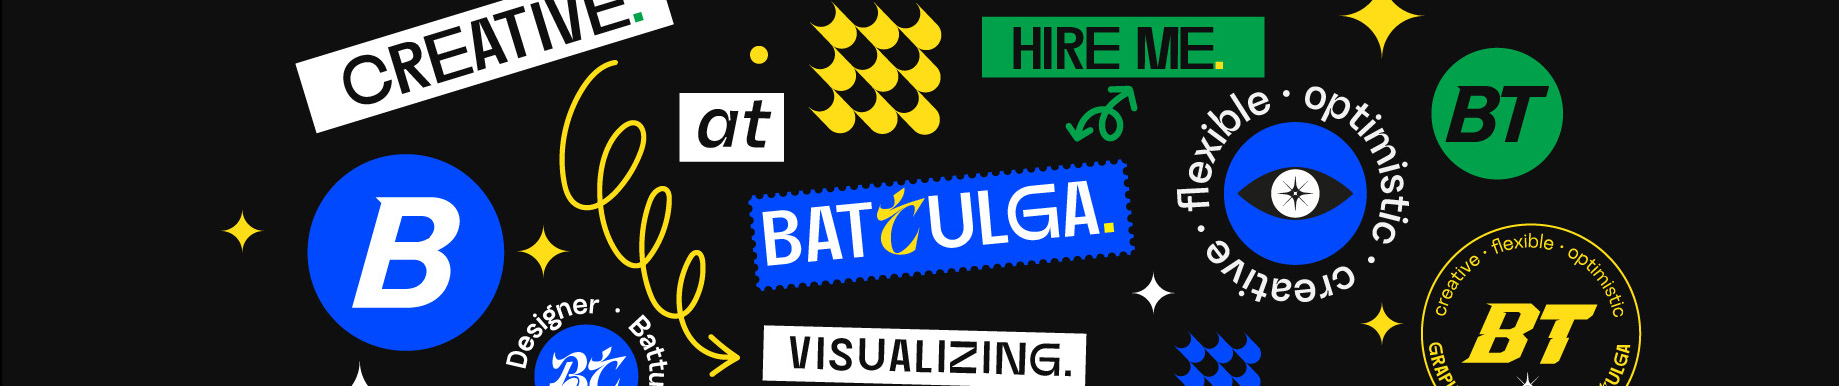 BAT TULGA's profile banner